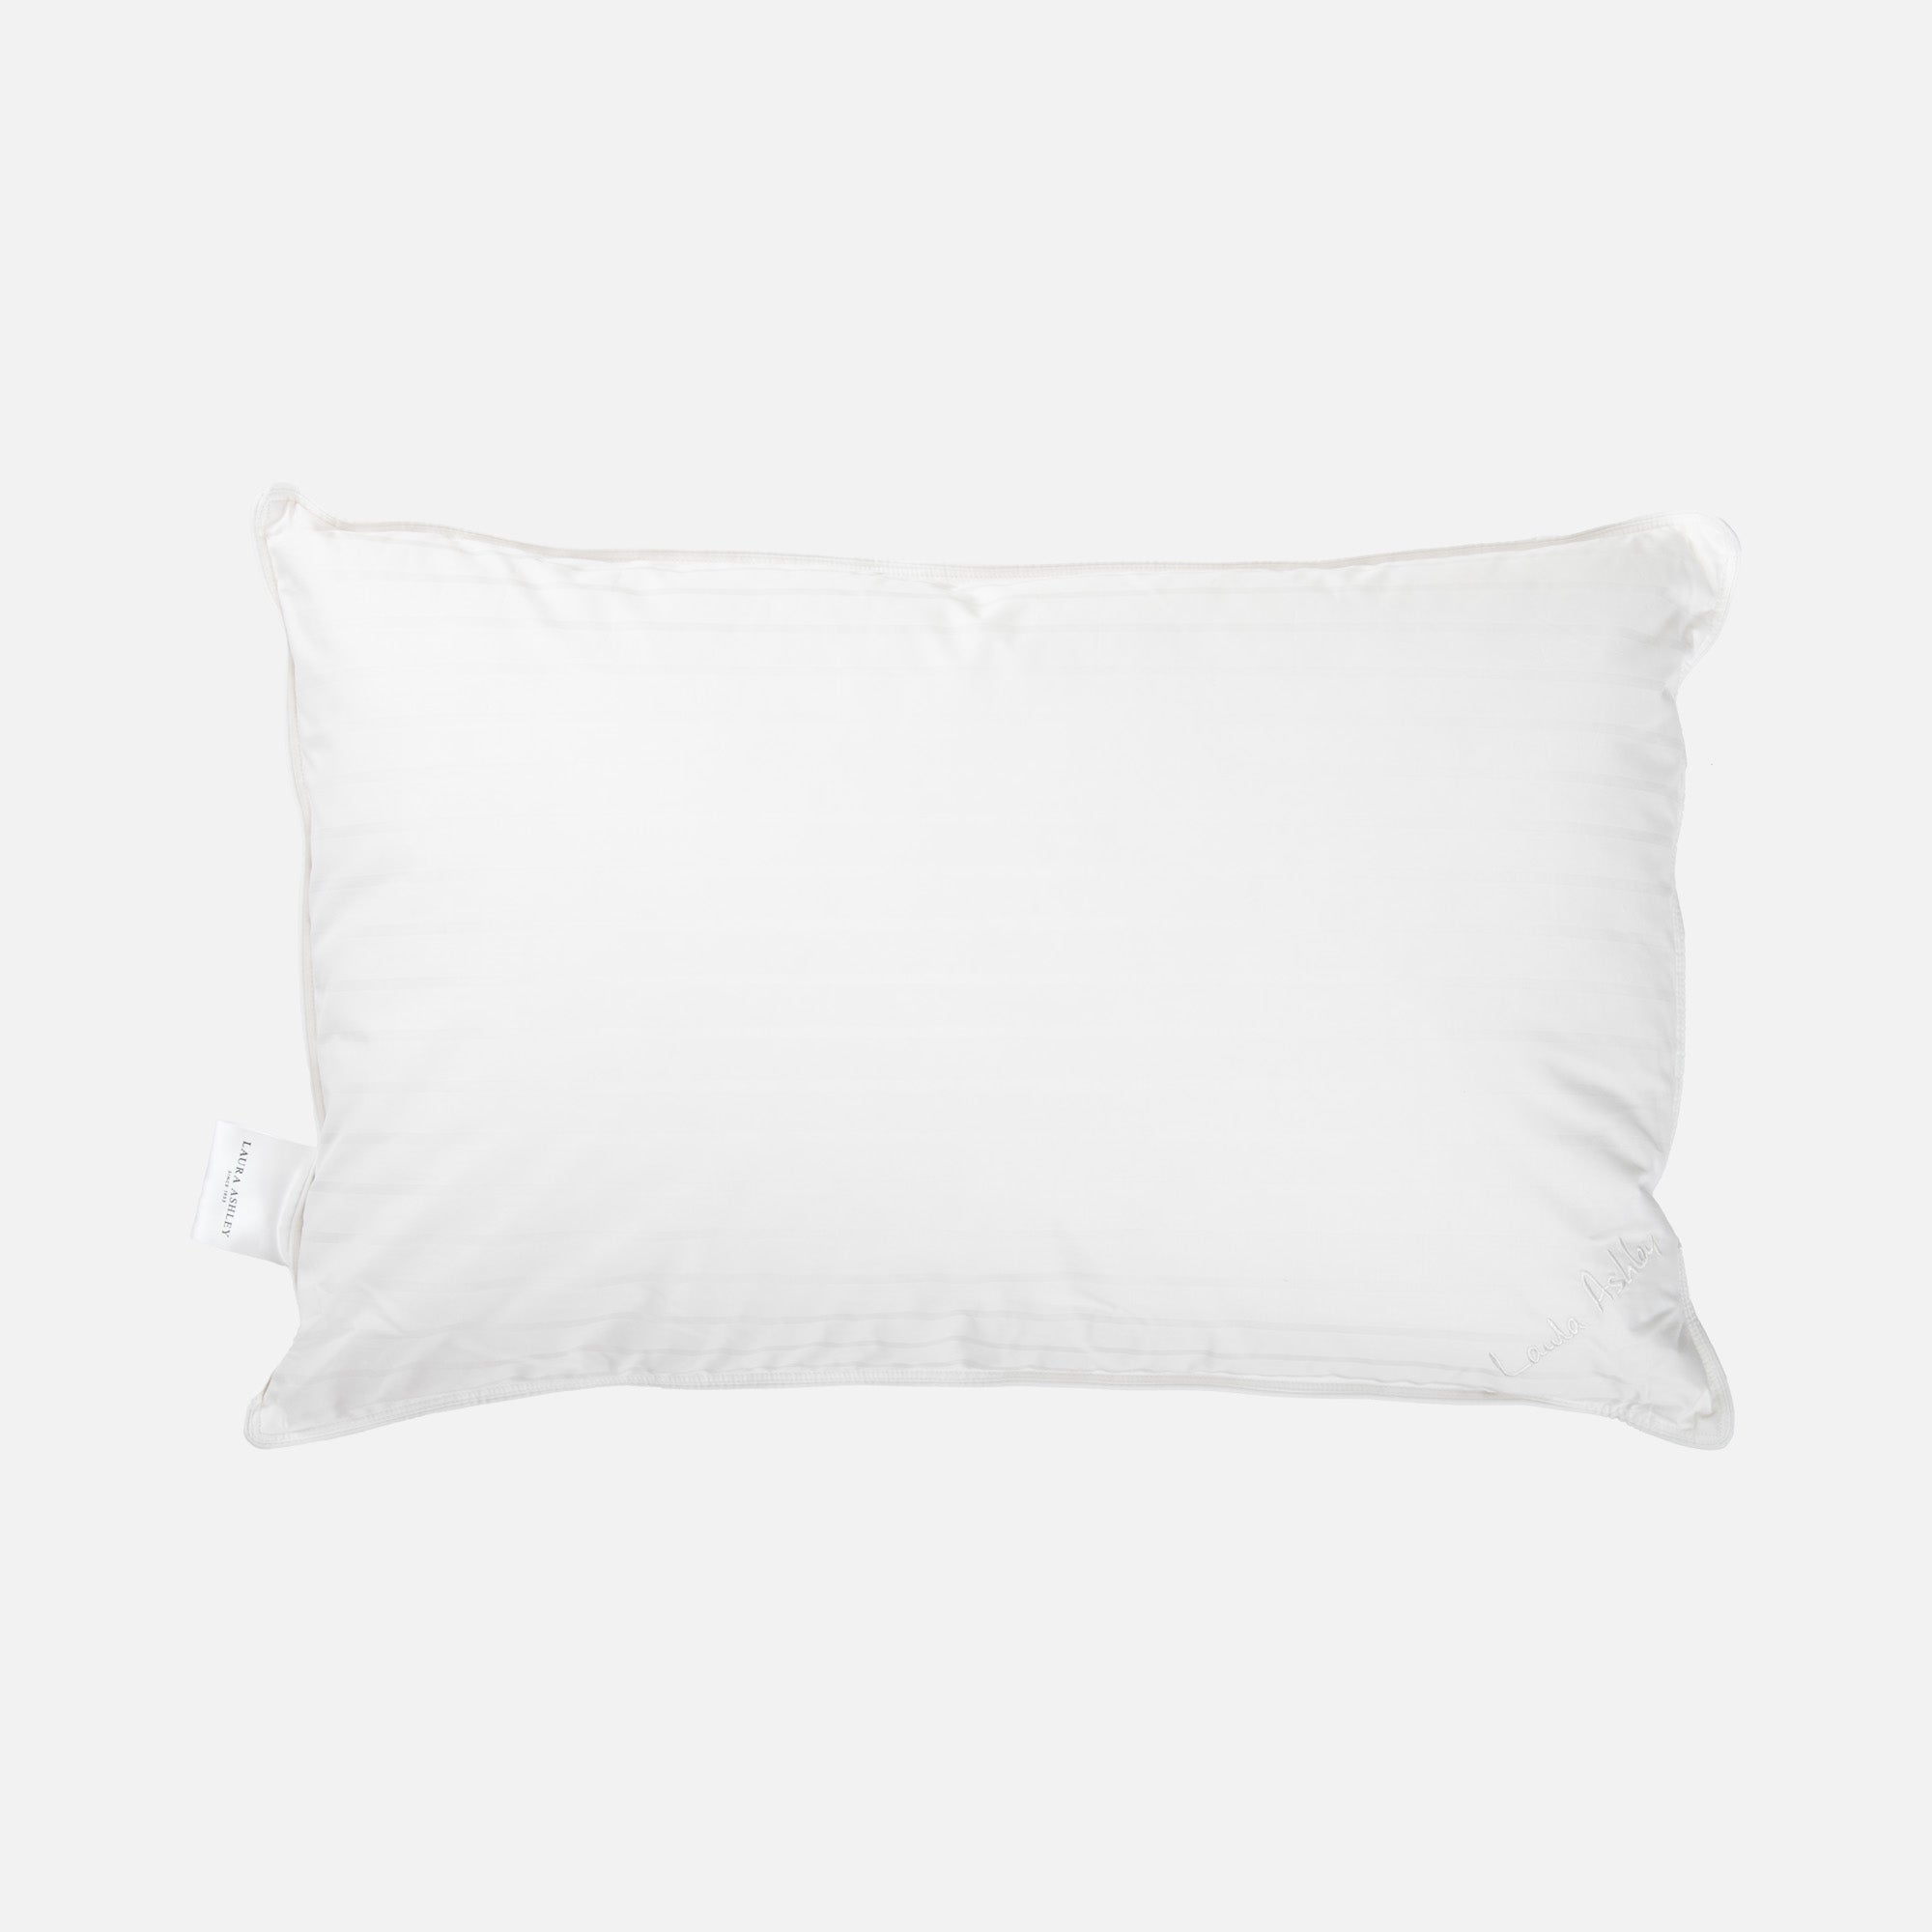 Pillows - Laura Ashley Duck Feather & Down Pillow